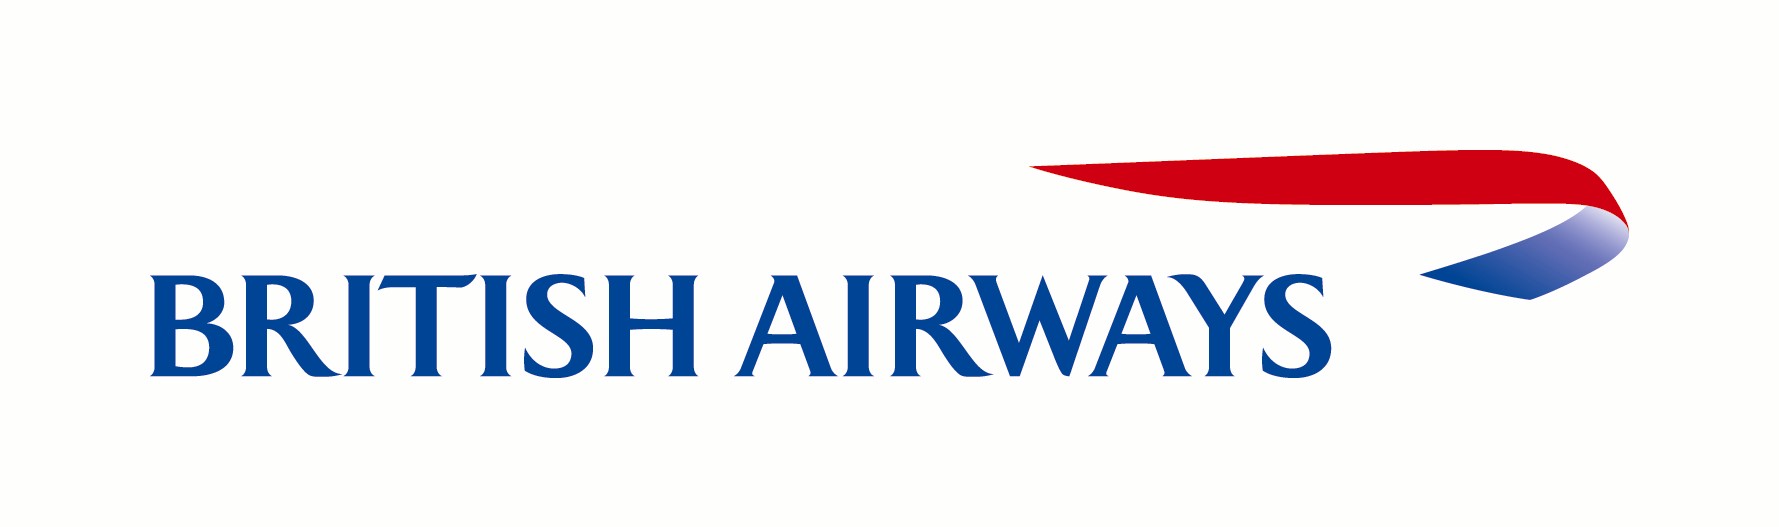 Avion Express Logo photo - 1